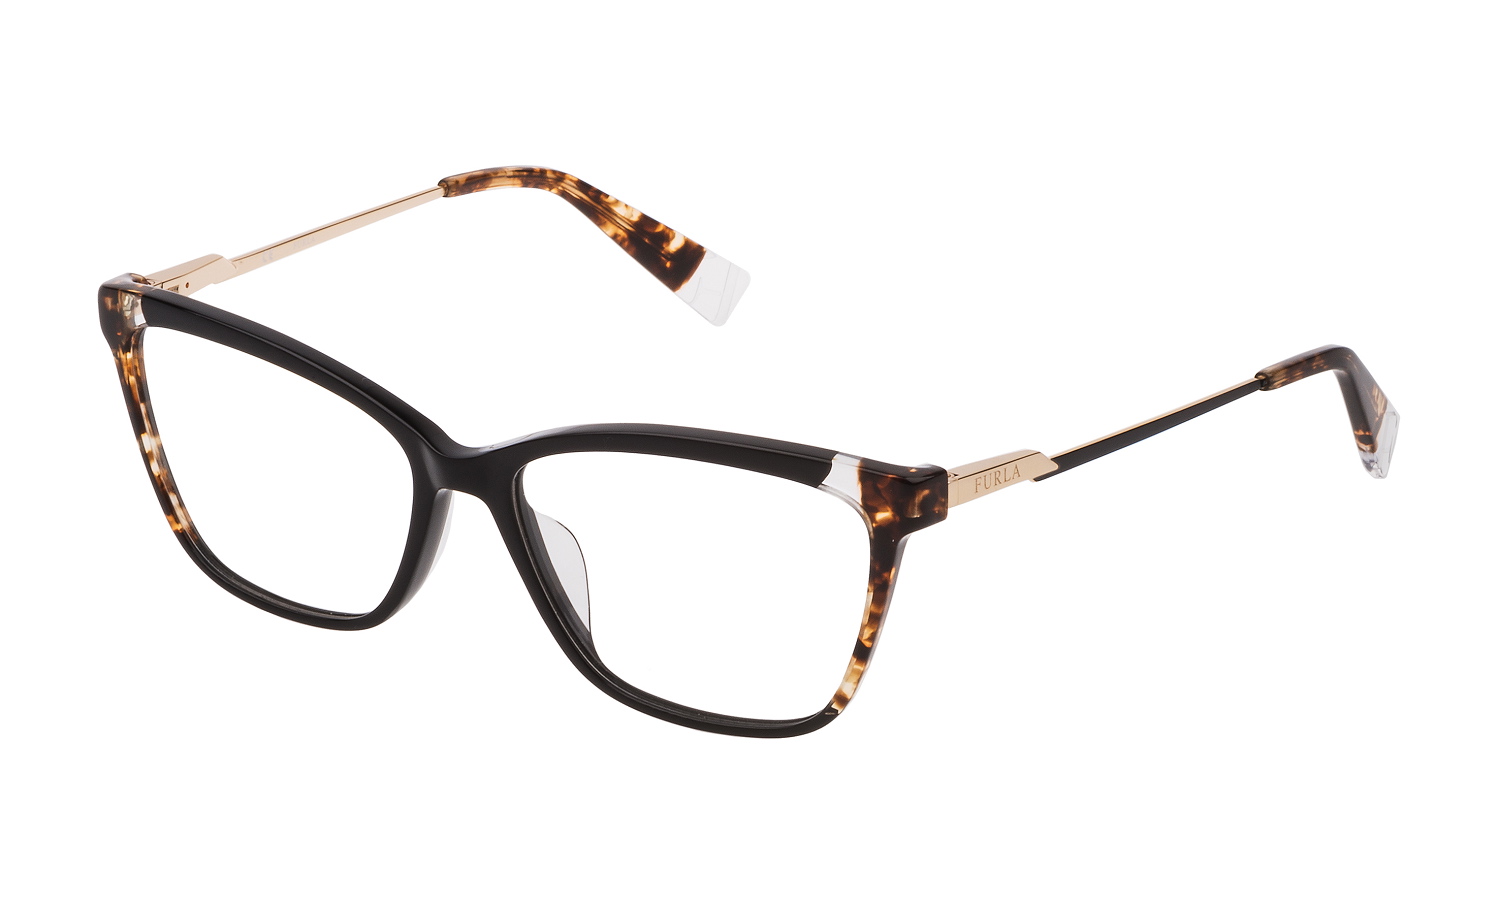 Furla VFU293 Prescription Glasses from $141.60 | Furla | Designer Glasses